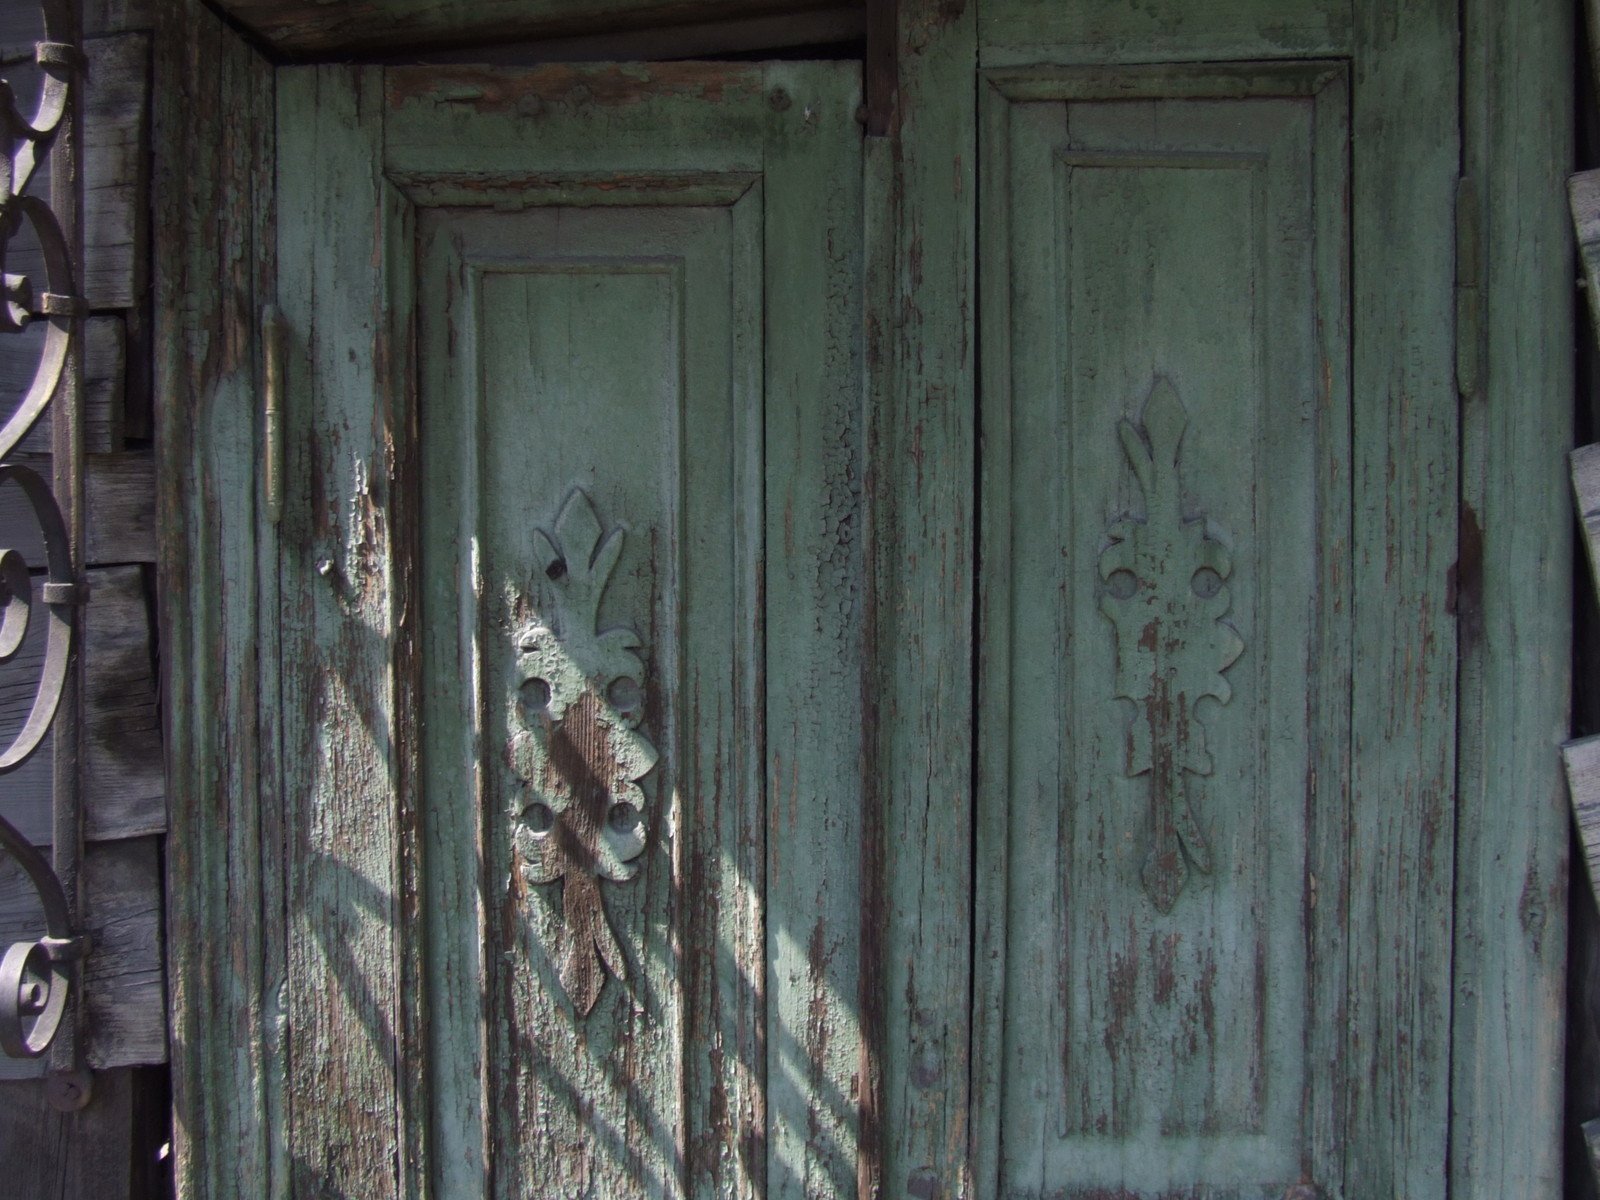 the old wood door is painted green